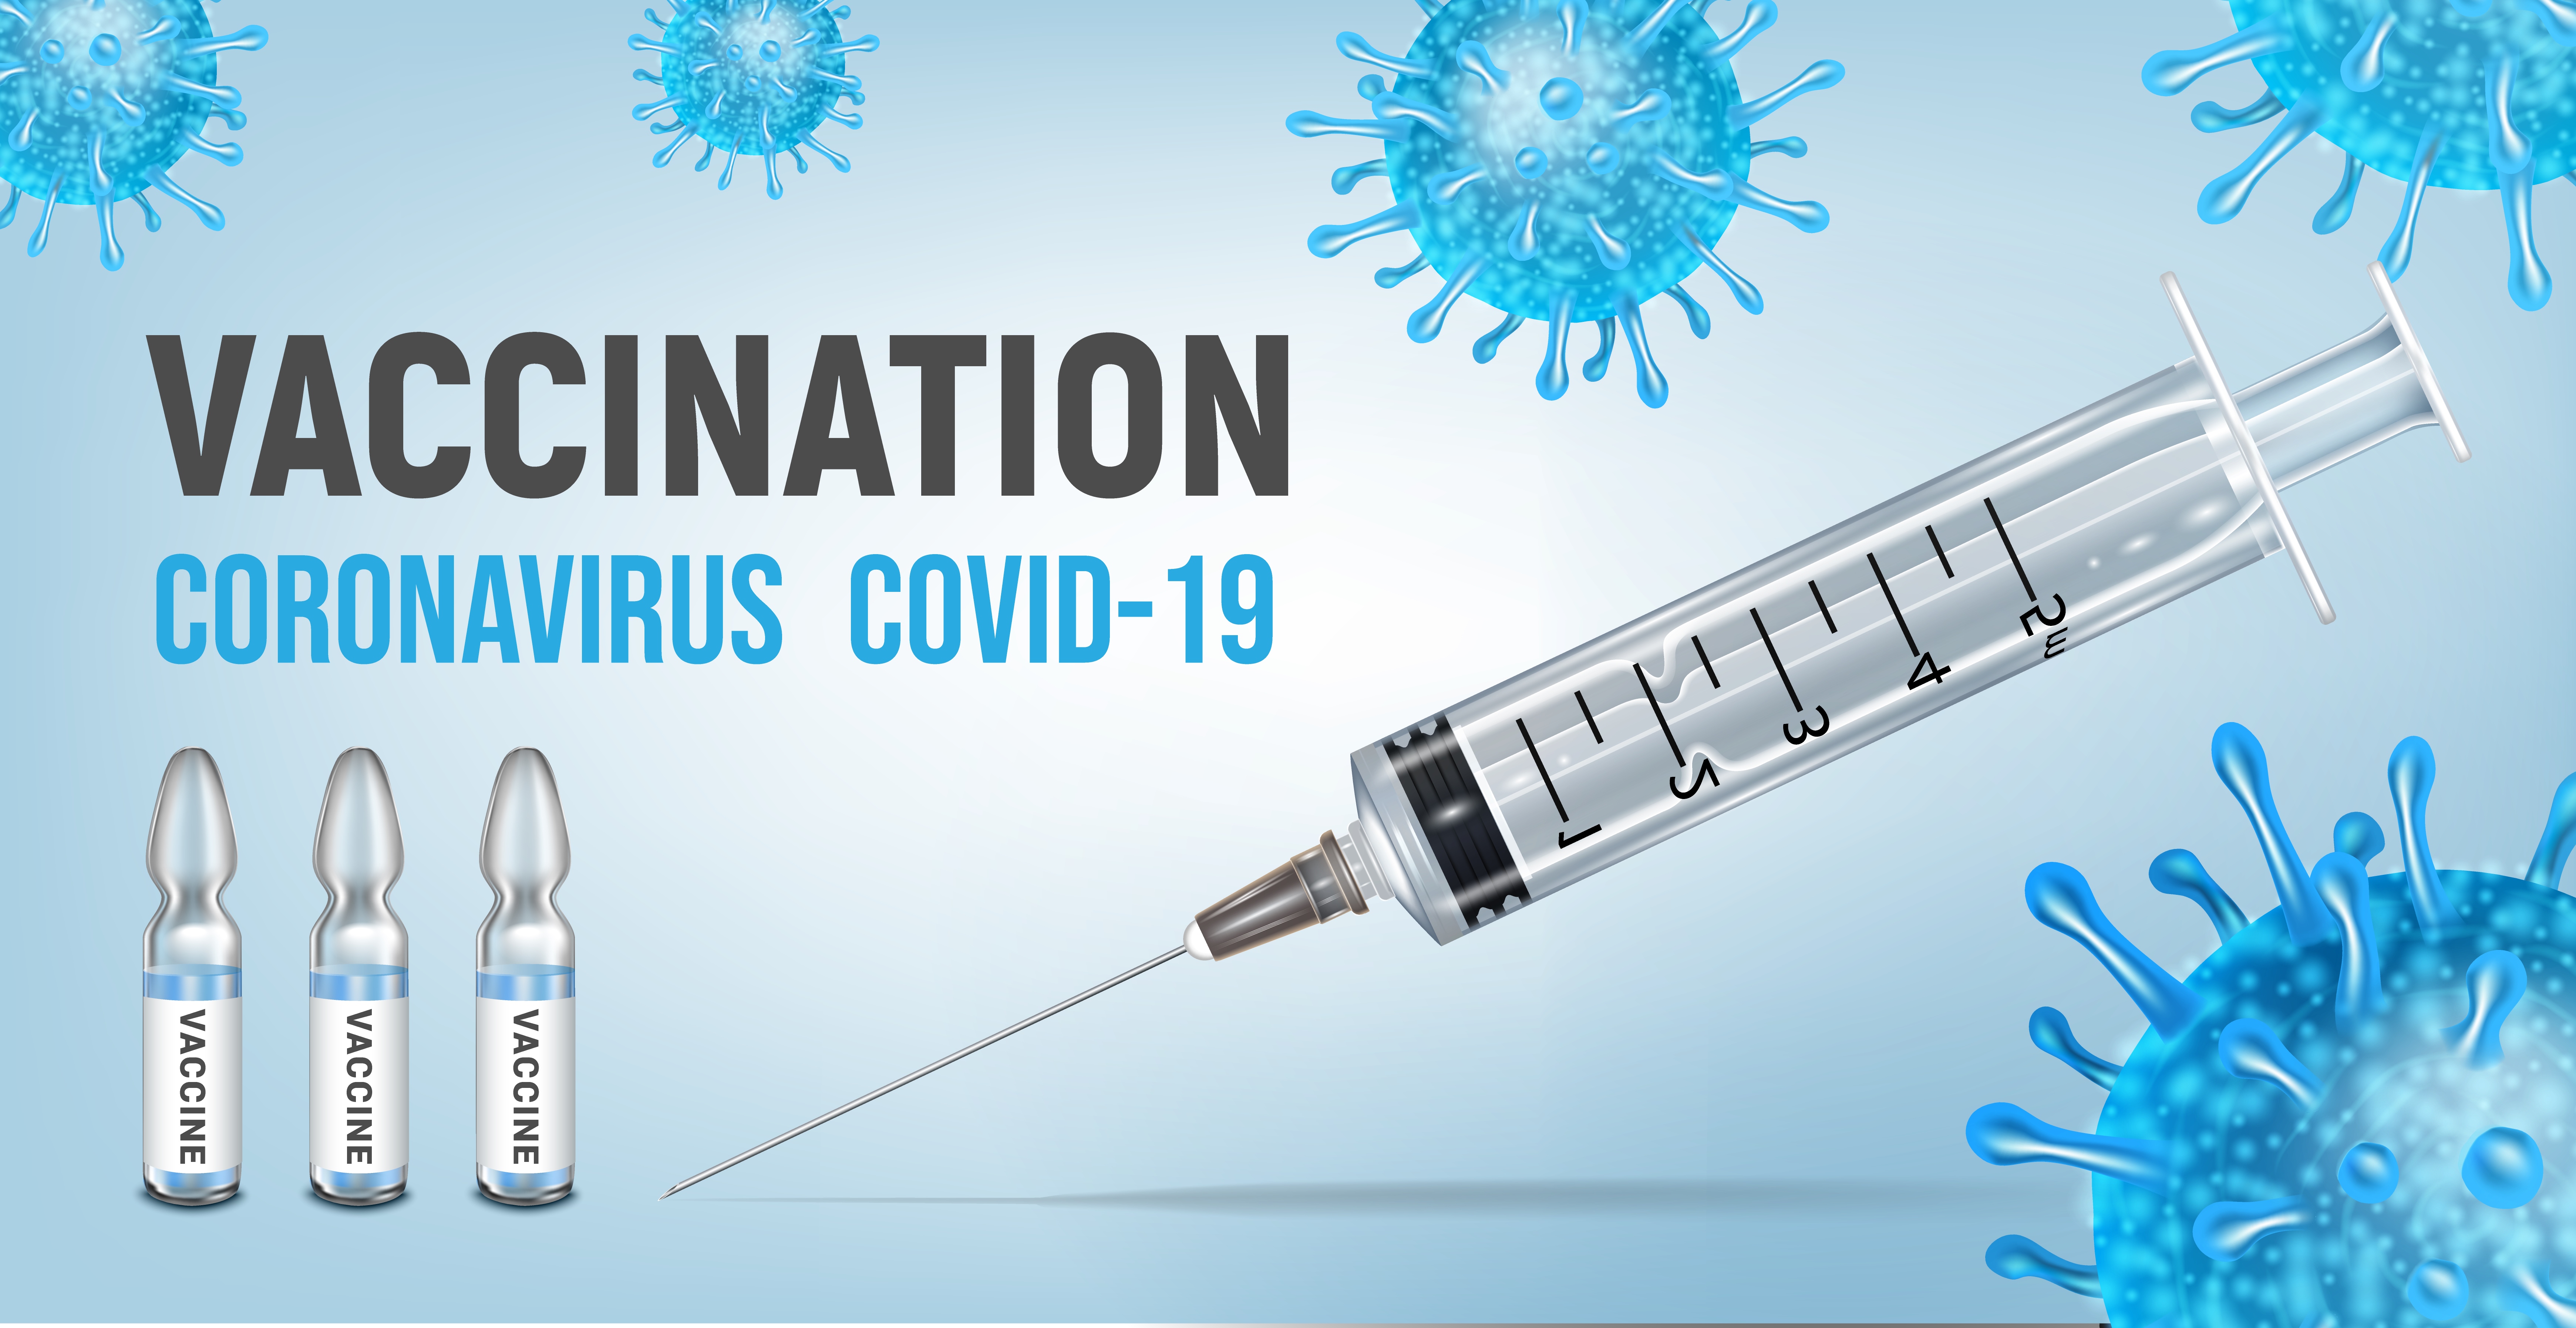 Вакцины ярославль. Вакцинация Covid-19. Вакцинация картинки. Вакцинация от коронавируса баннер. Реклама вакцины от коронавируса.